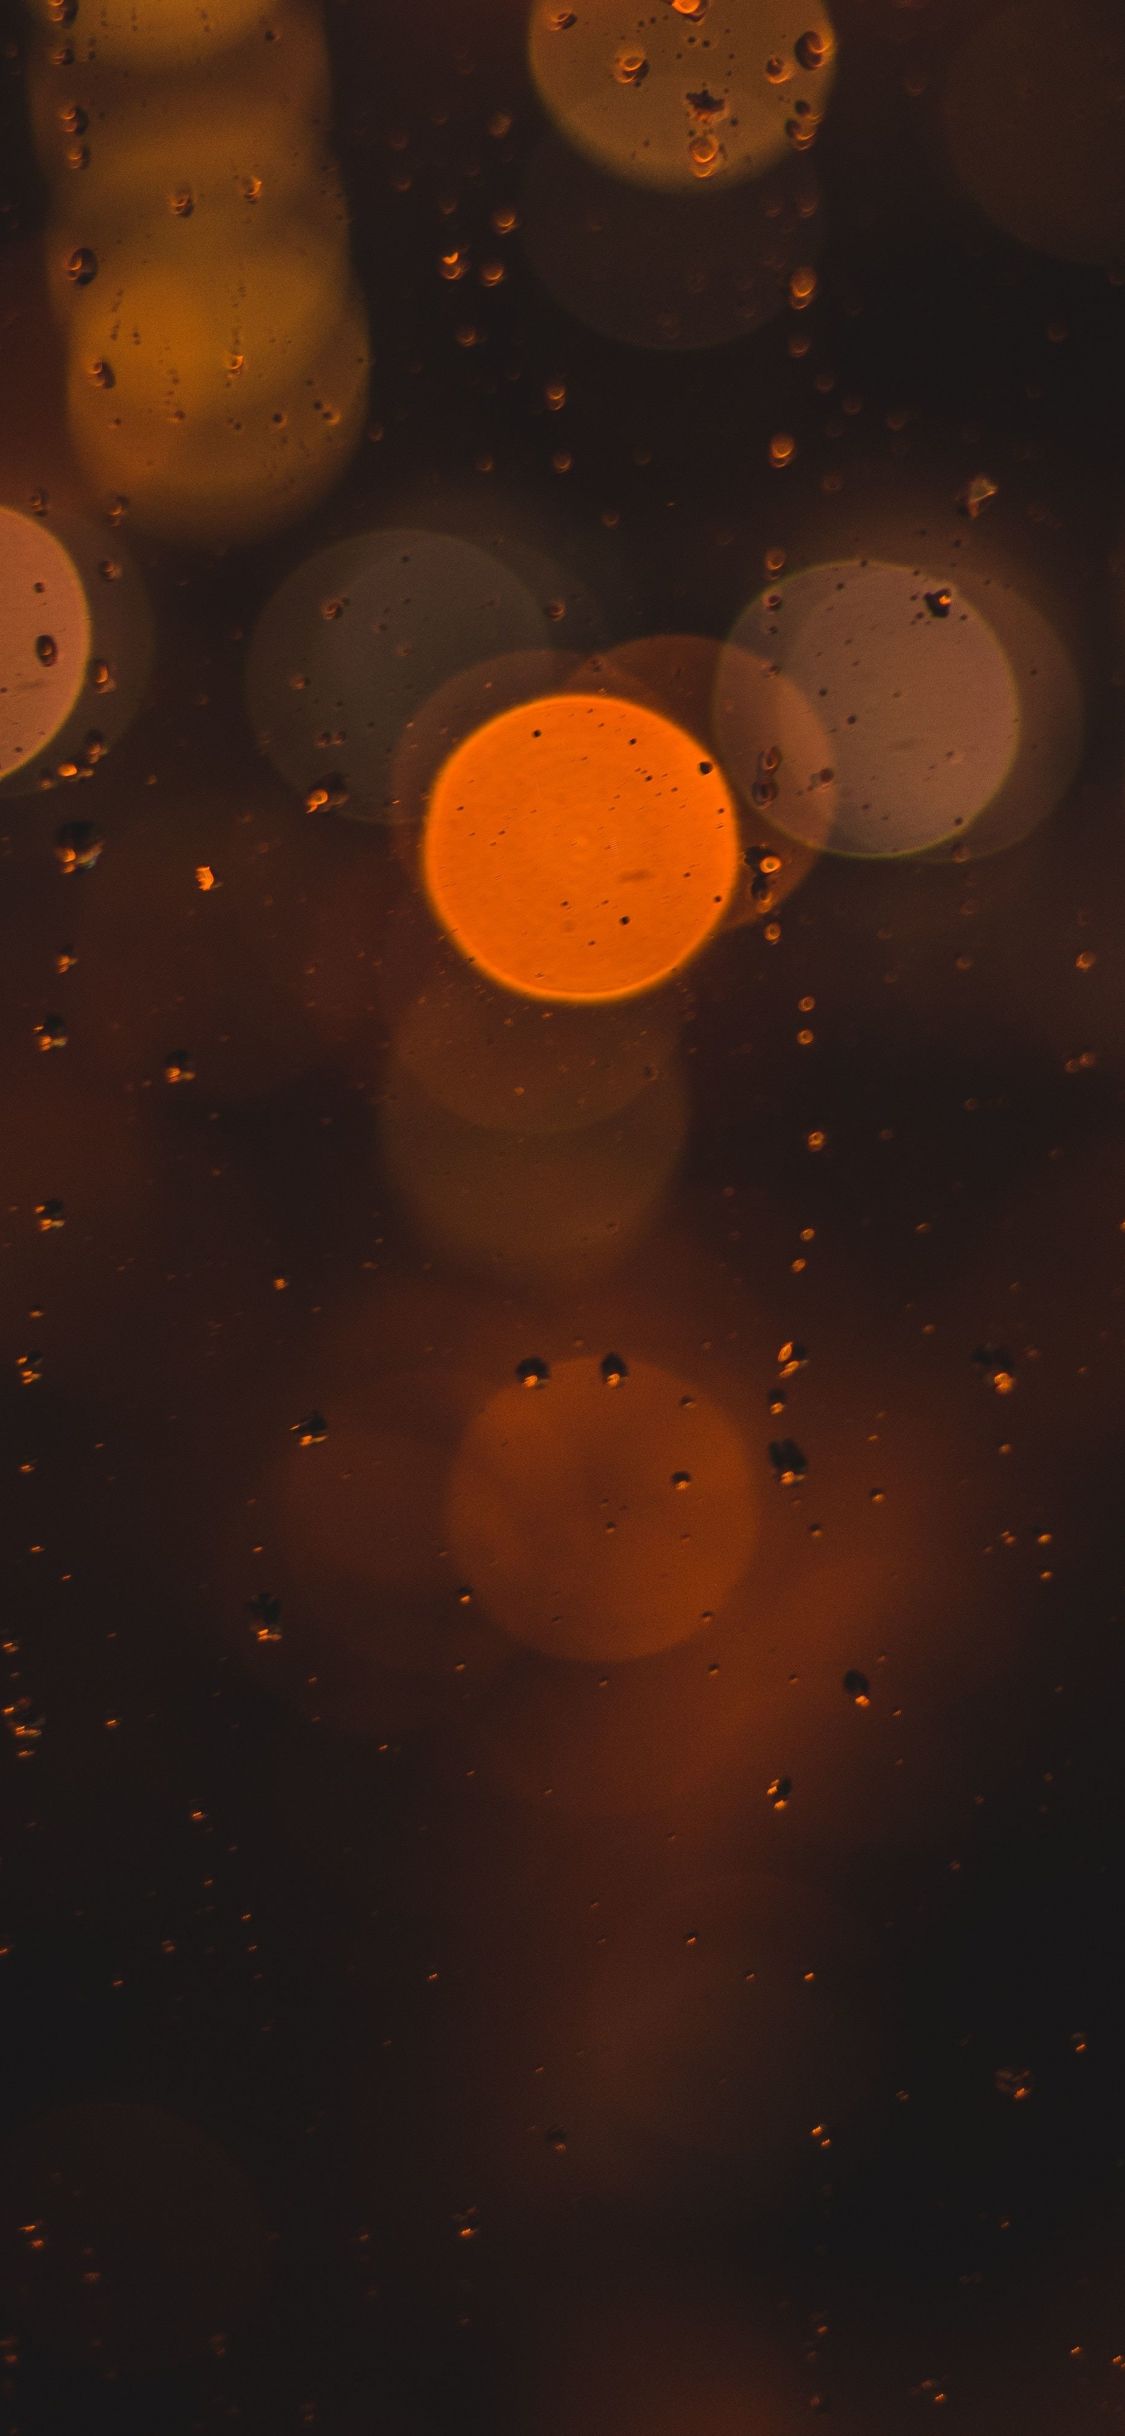 Bokeh lights on a rainy night wallpaper 1242x2688 - Dark orange